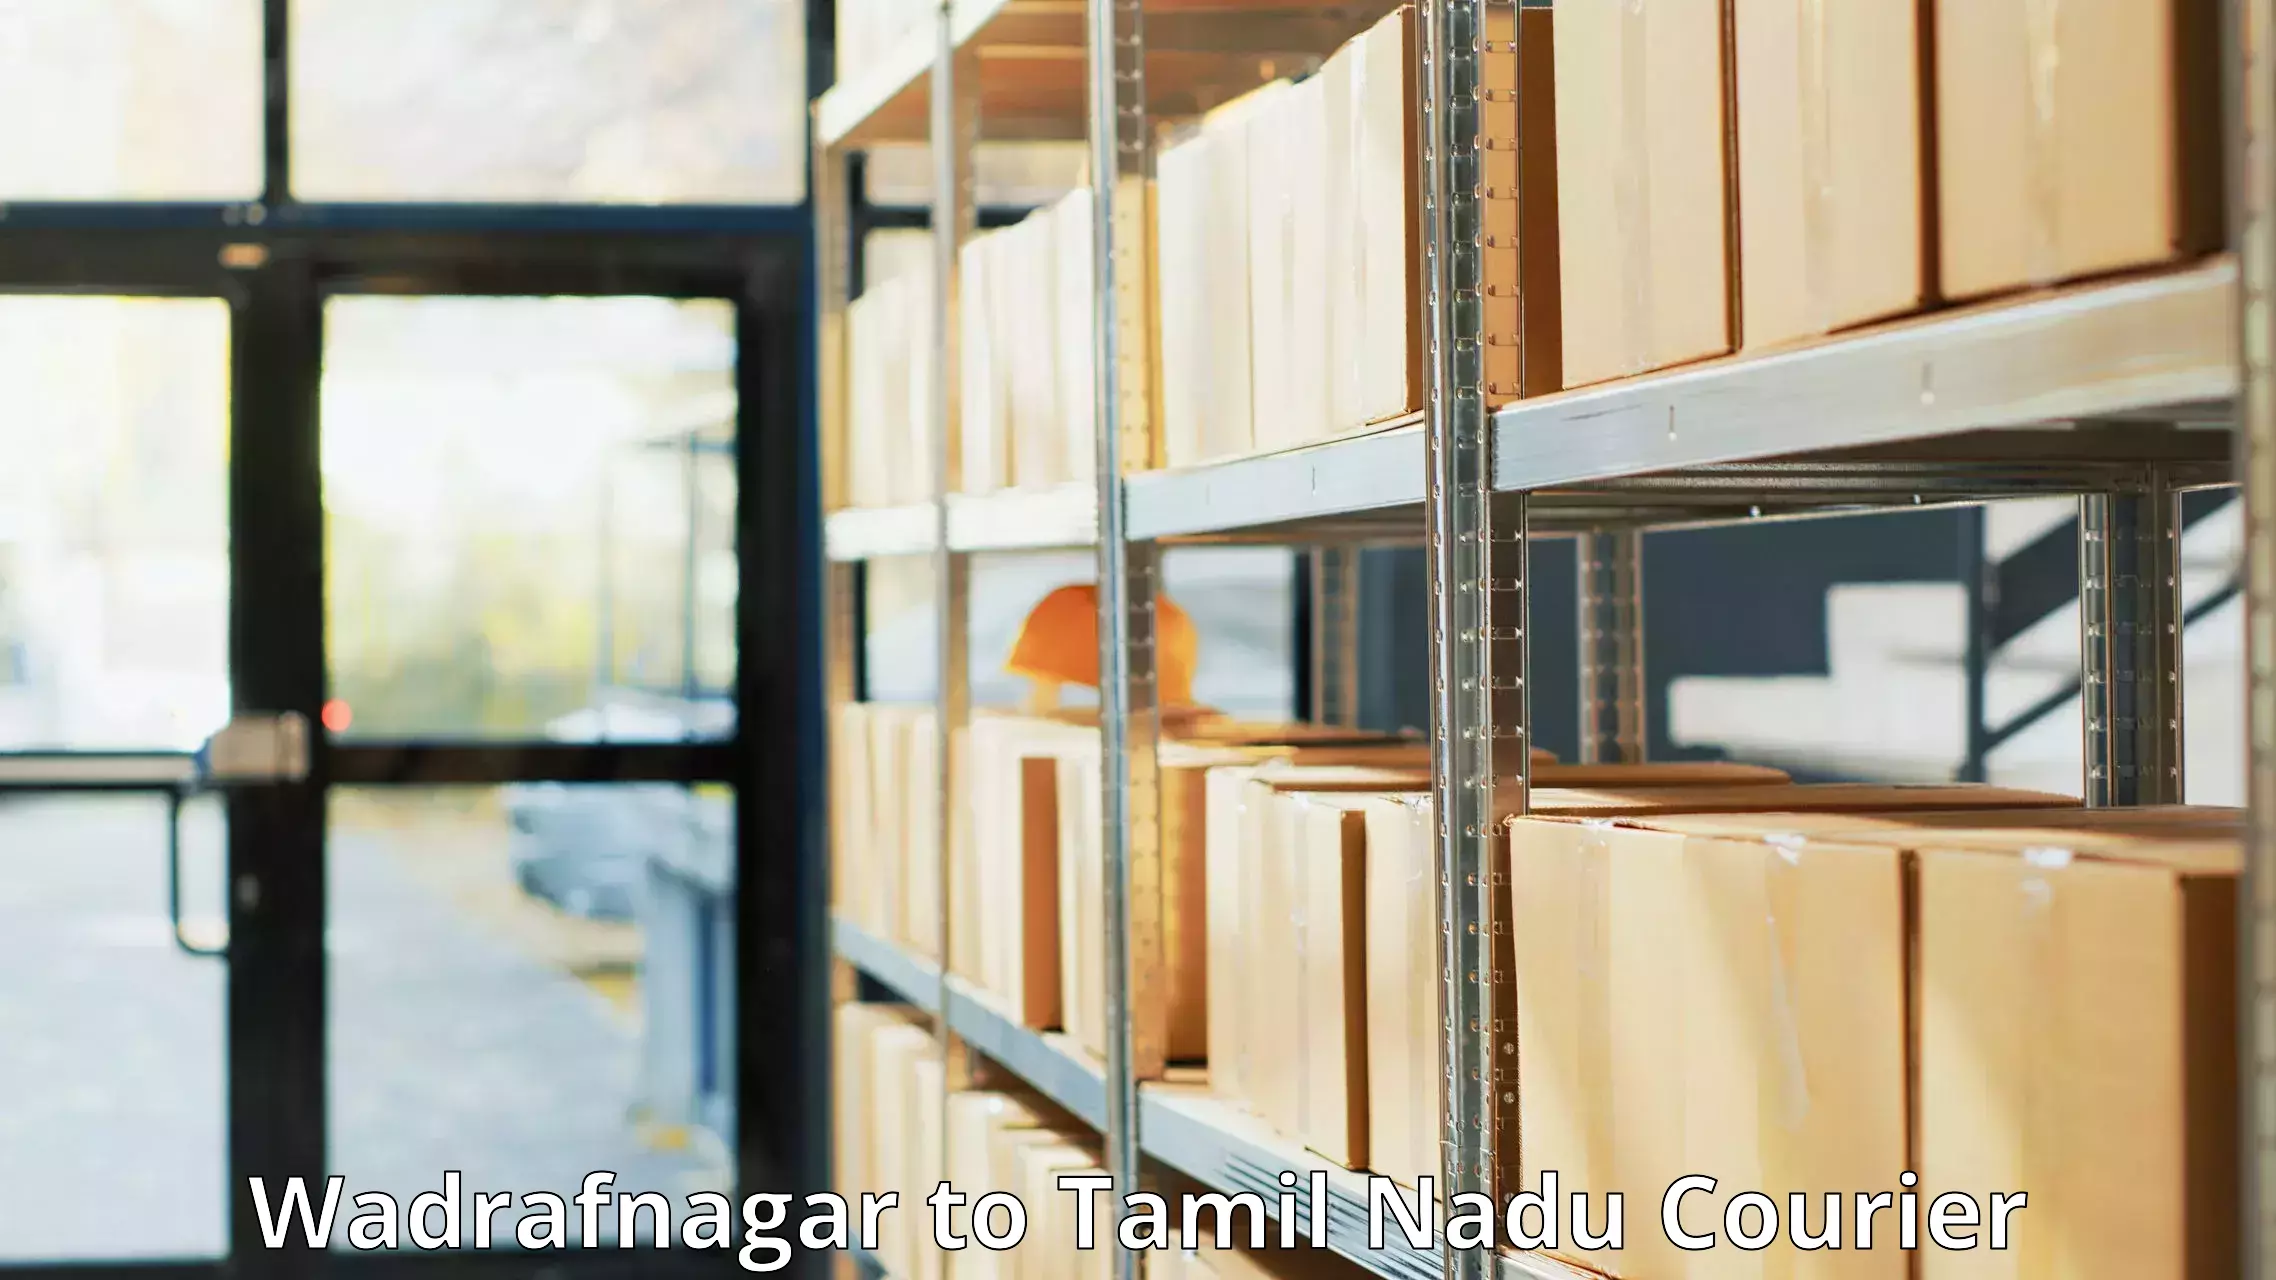 Courier service partnerships Wadrafnagar to Nagapattinam